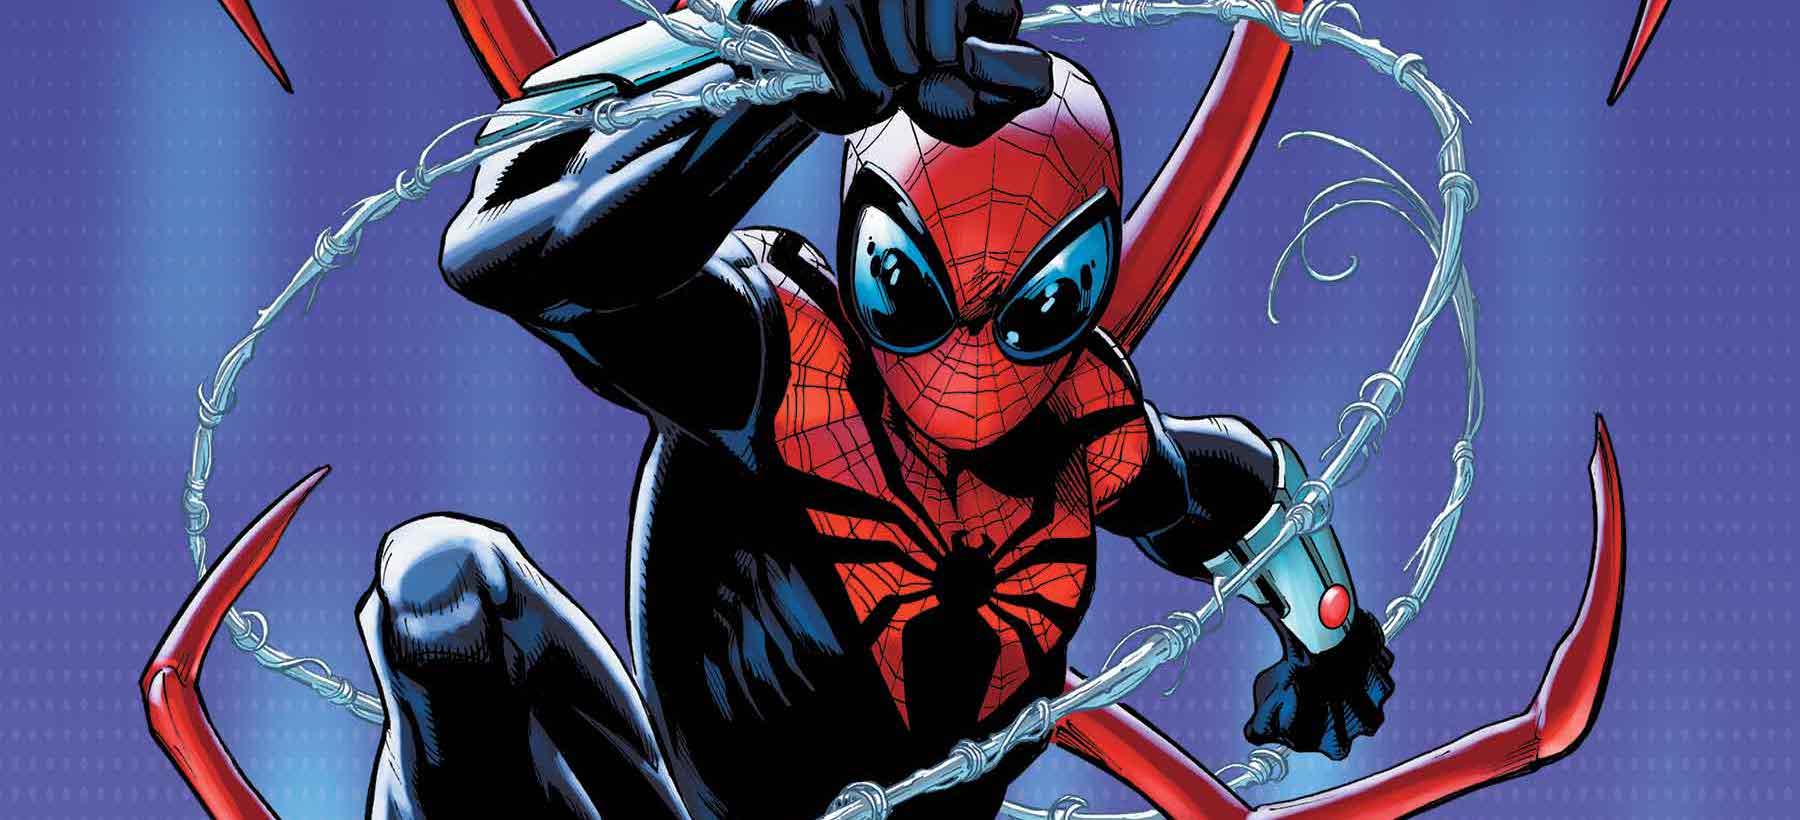 'Superior Spider-Man' #1 to introduce new female villain